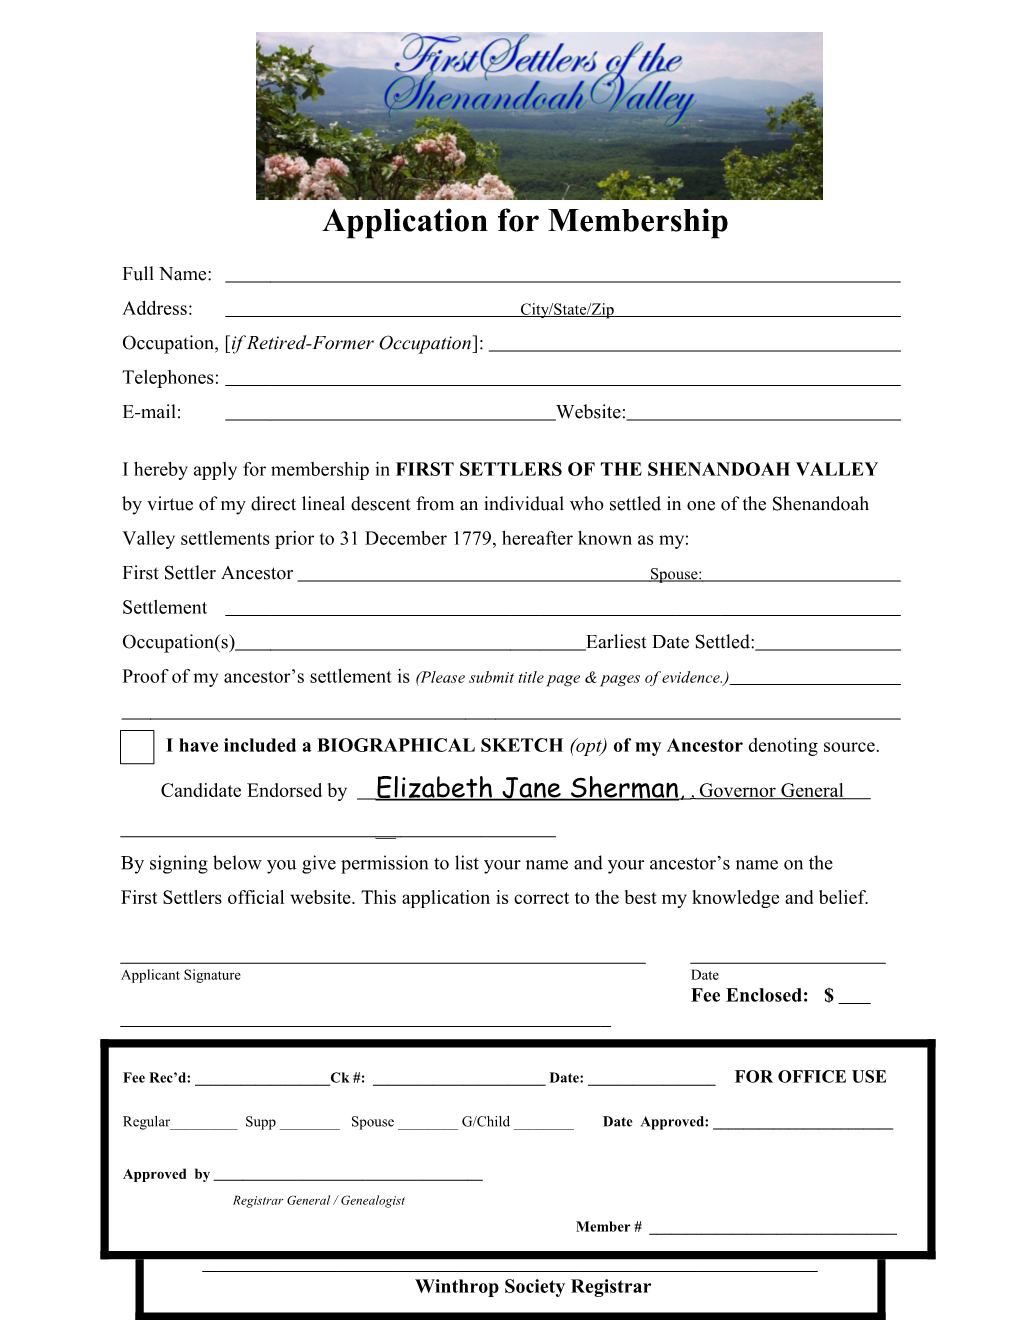 Application for Membership s9